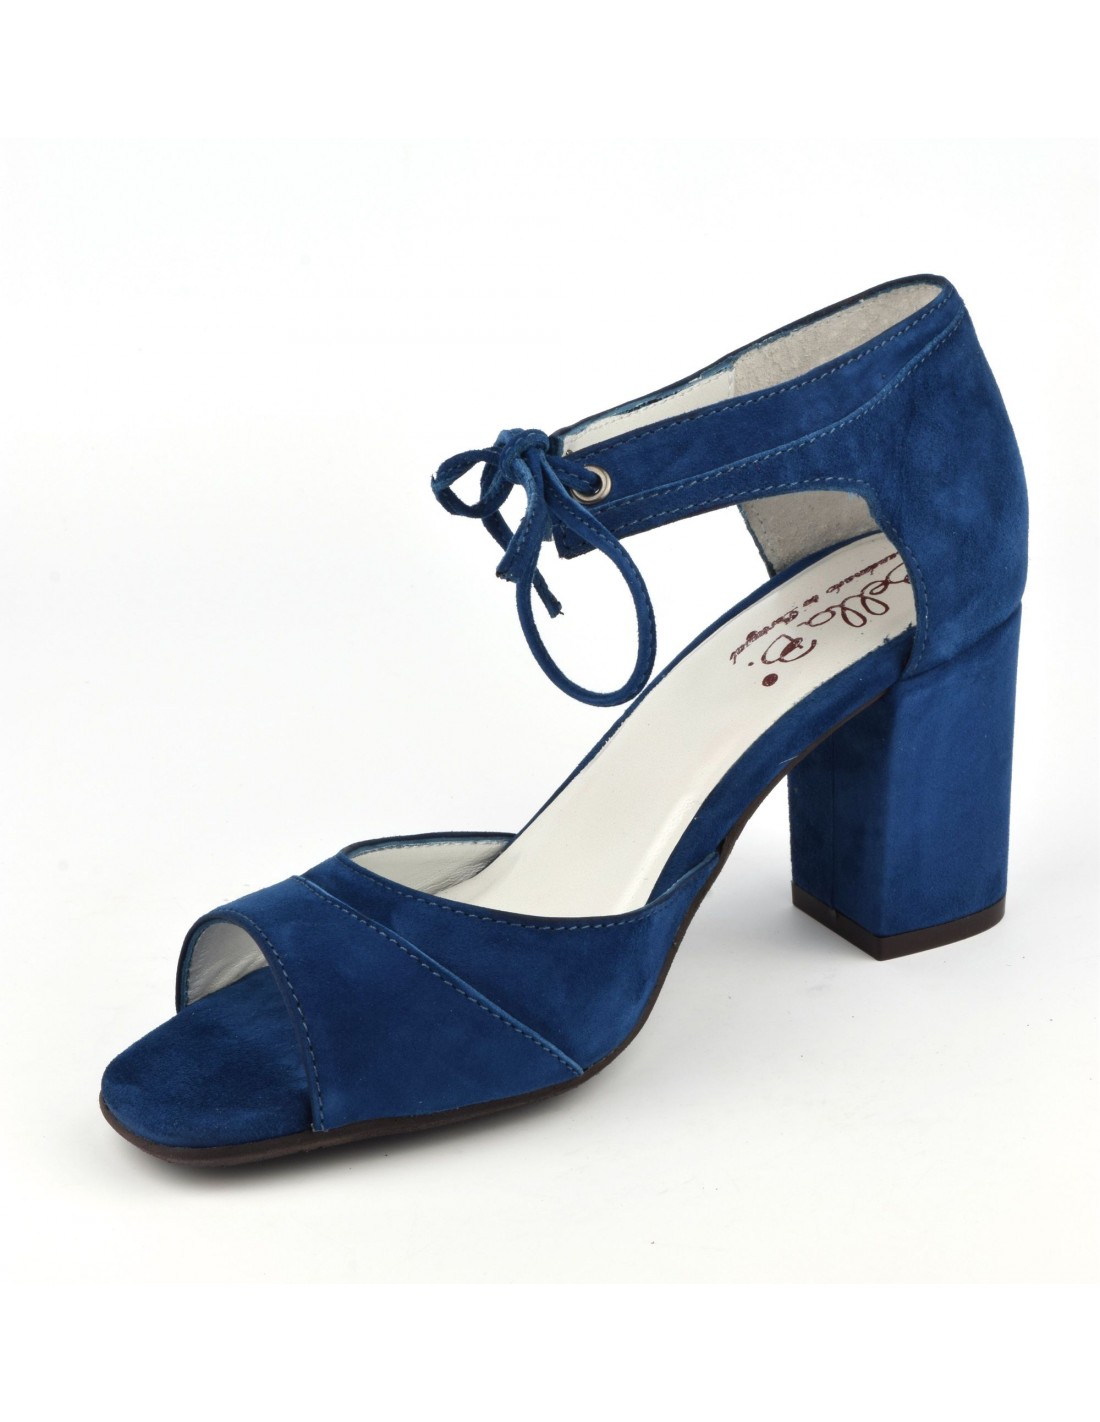 Royal blue suede leather lace-up sandals, square heels, Blau, Bella B